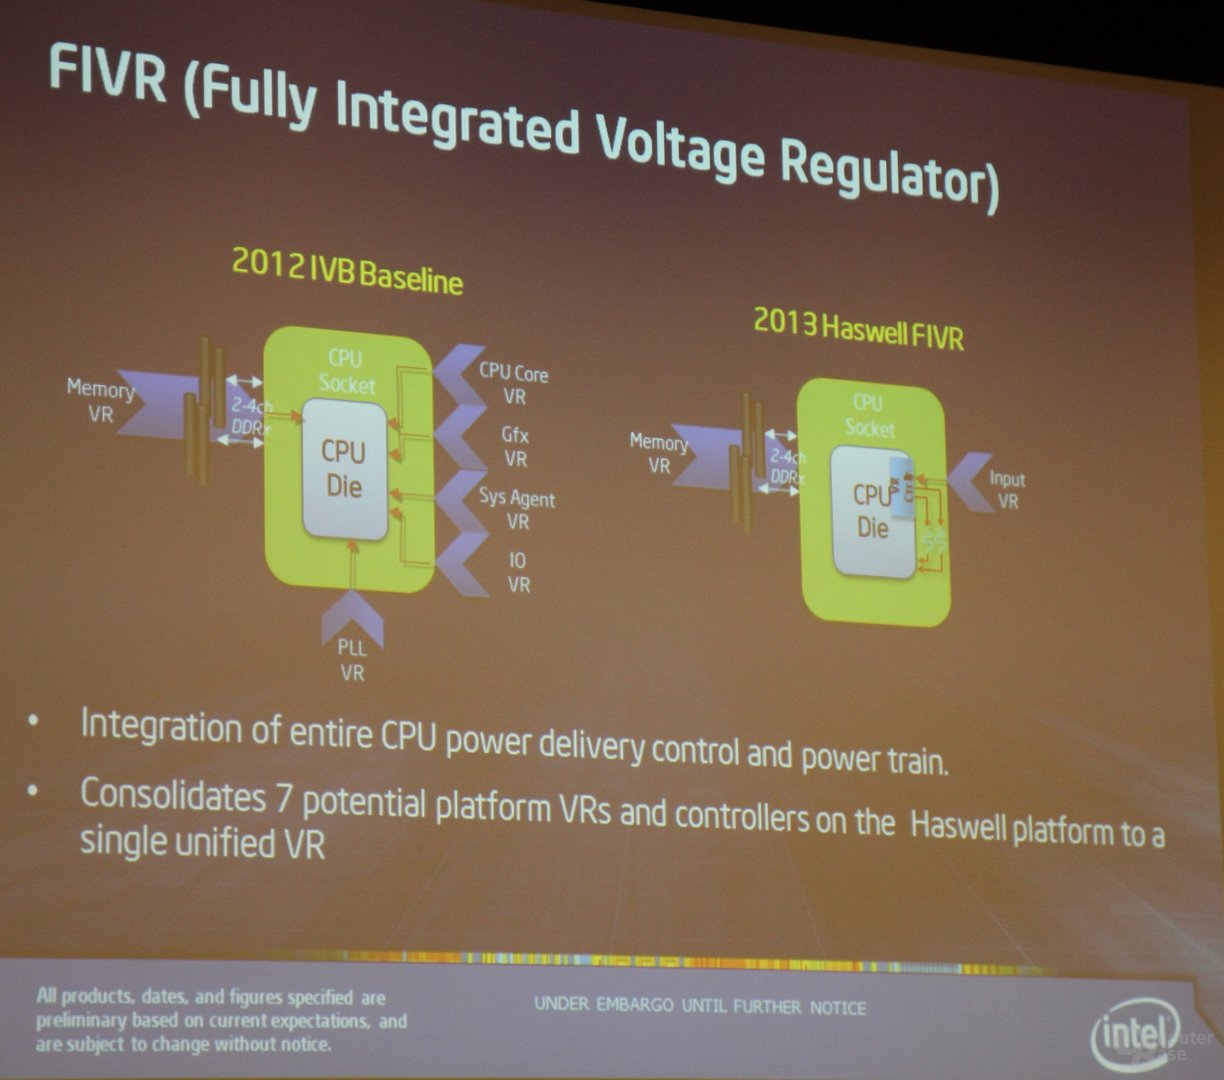 Fully Integrated Voltage Regulator